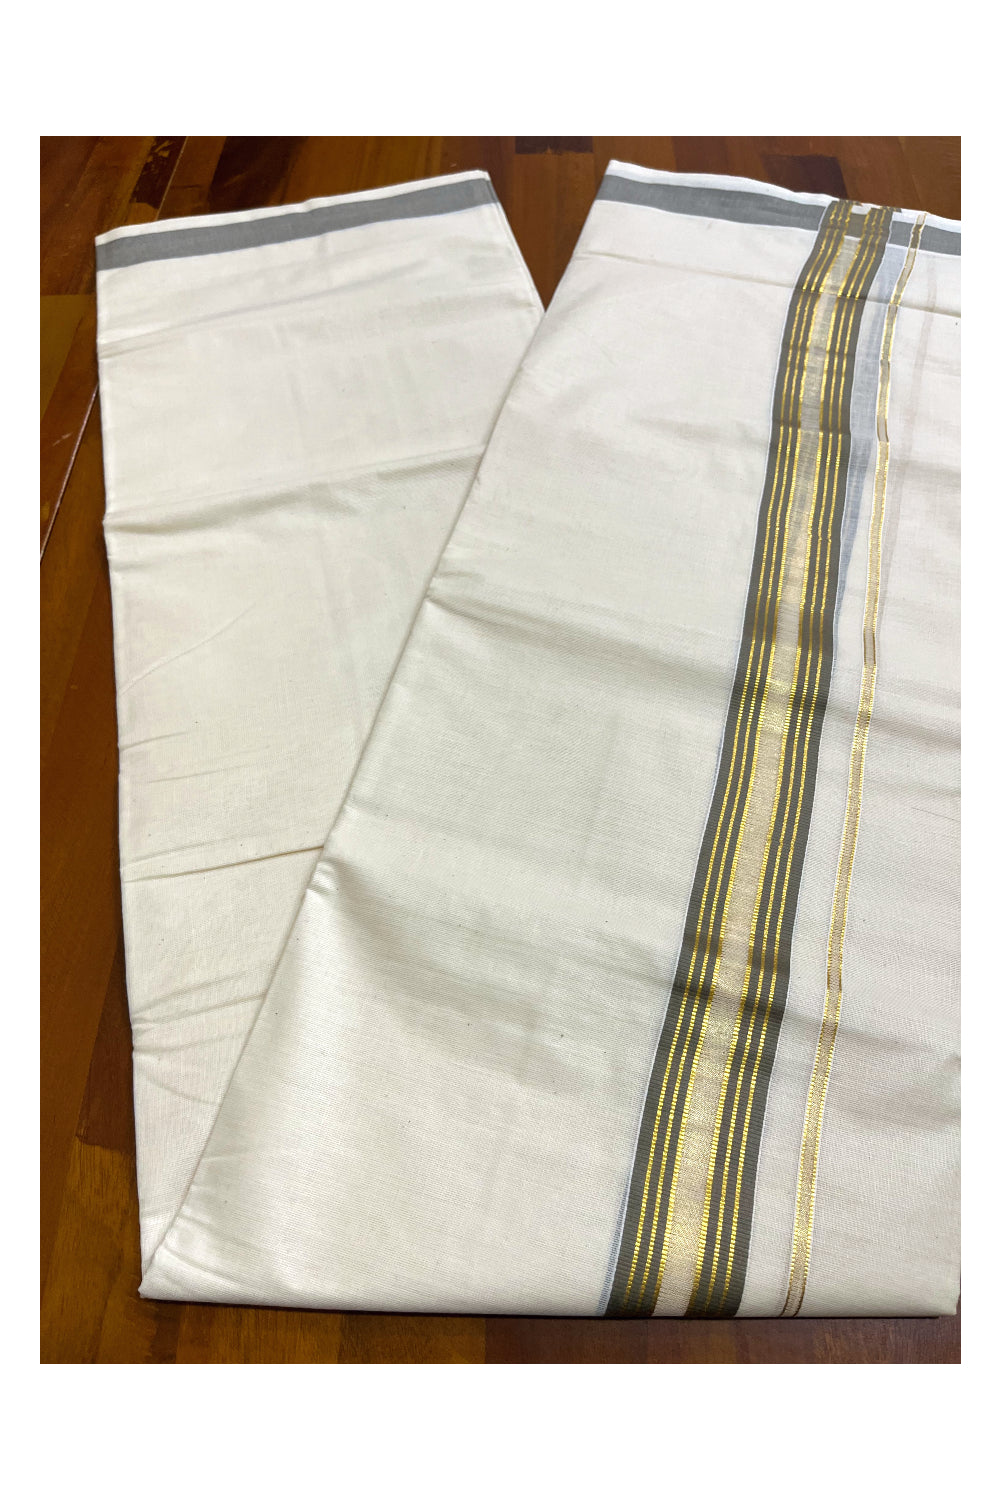 Kerala Pure Cotton Double Mundu with Grey and Kasavu Lines Border (South Indian Kerala Dhoti)